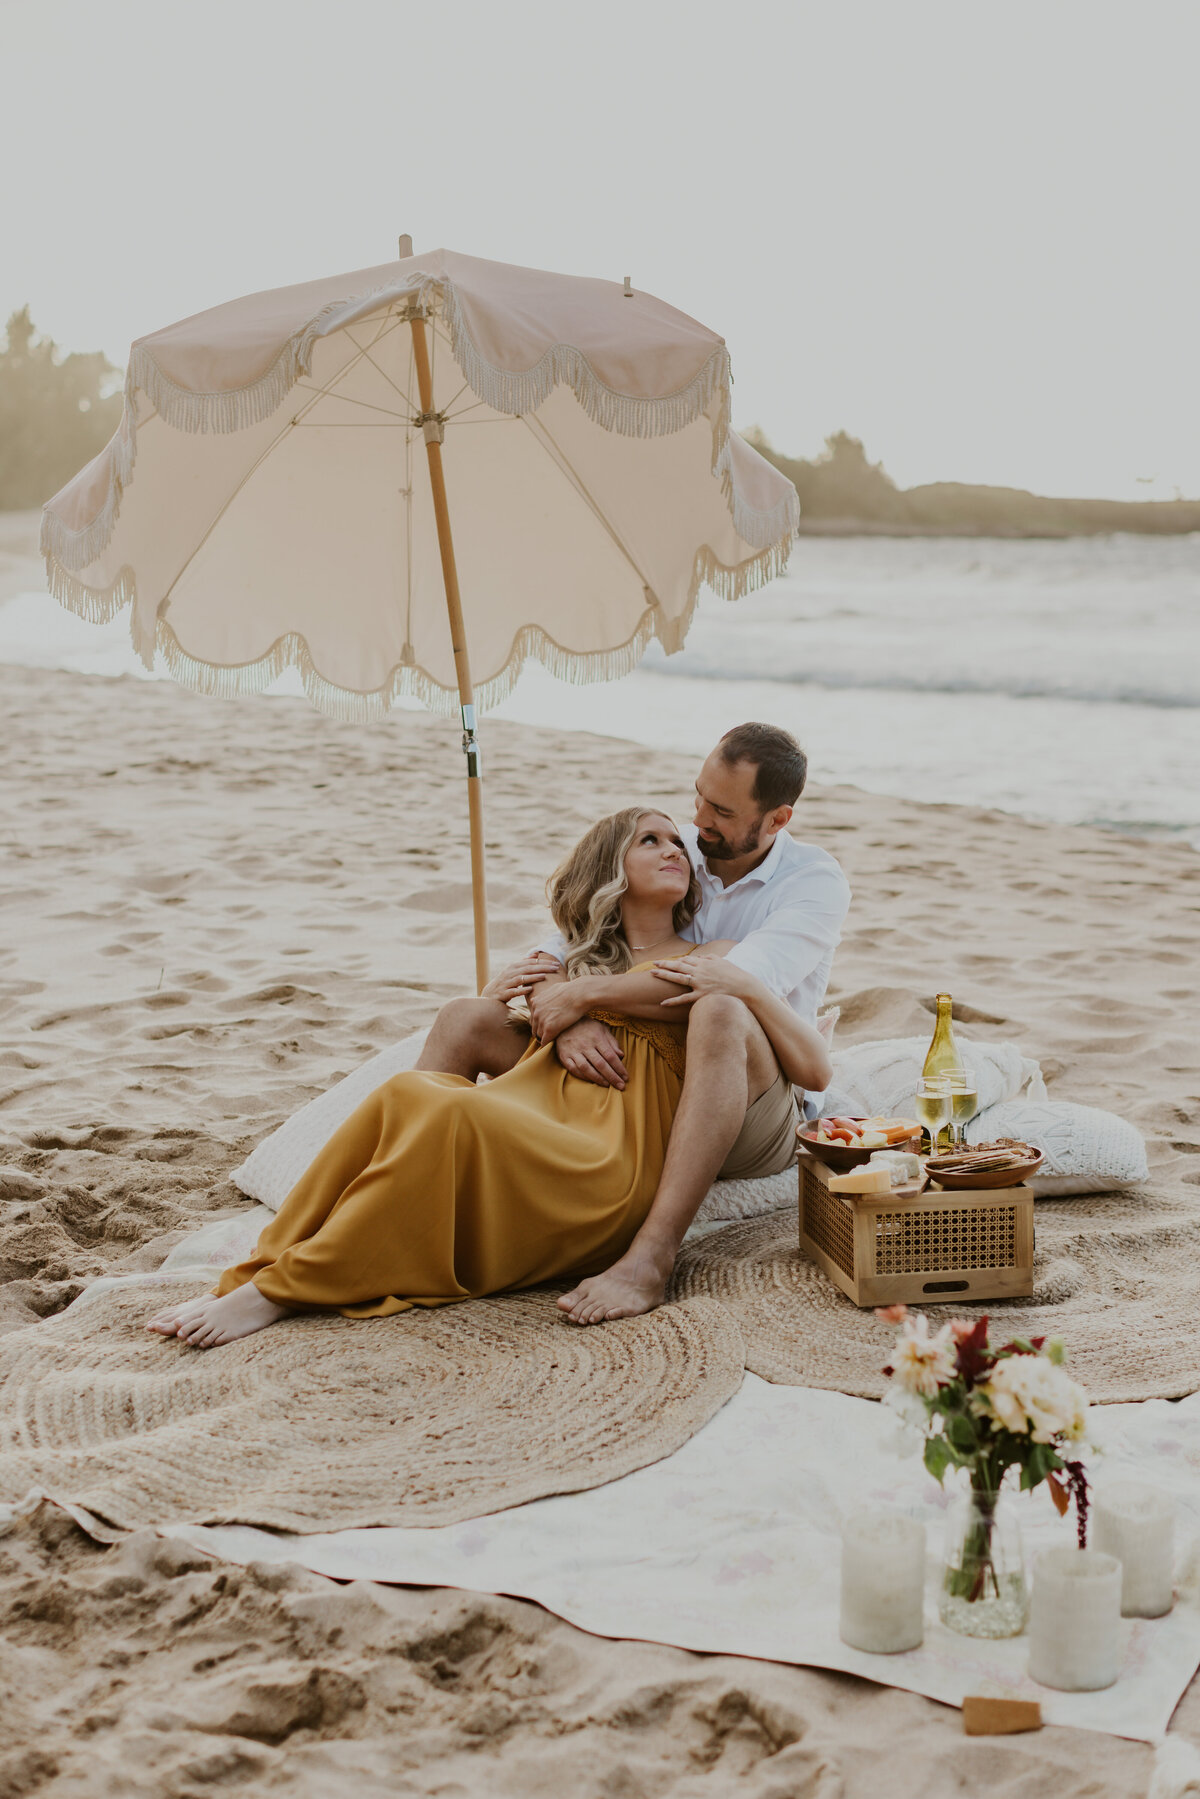 Romantic Beach picnic couples photos in Maui